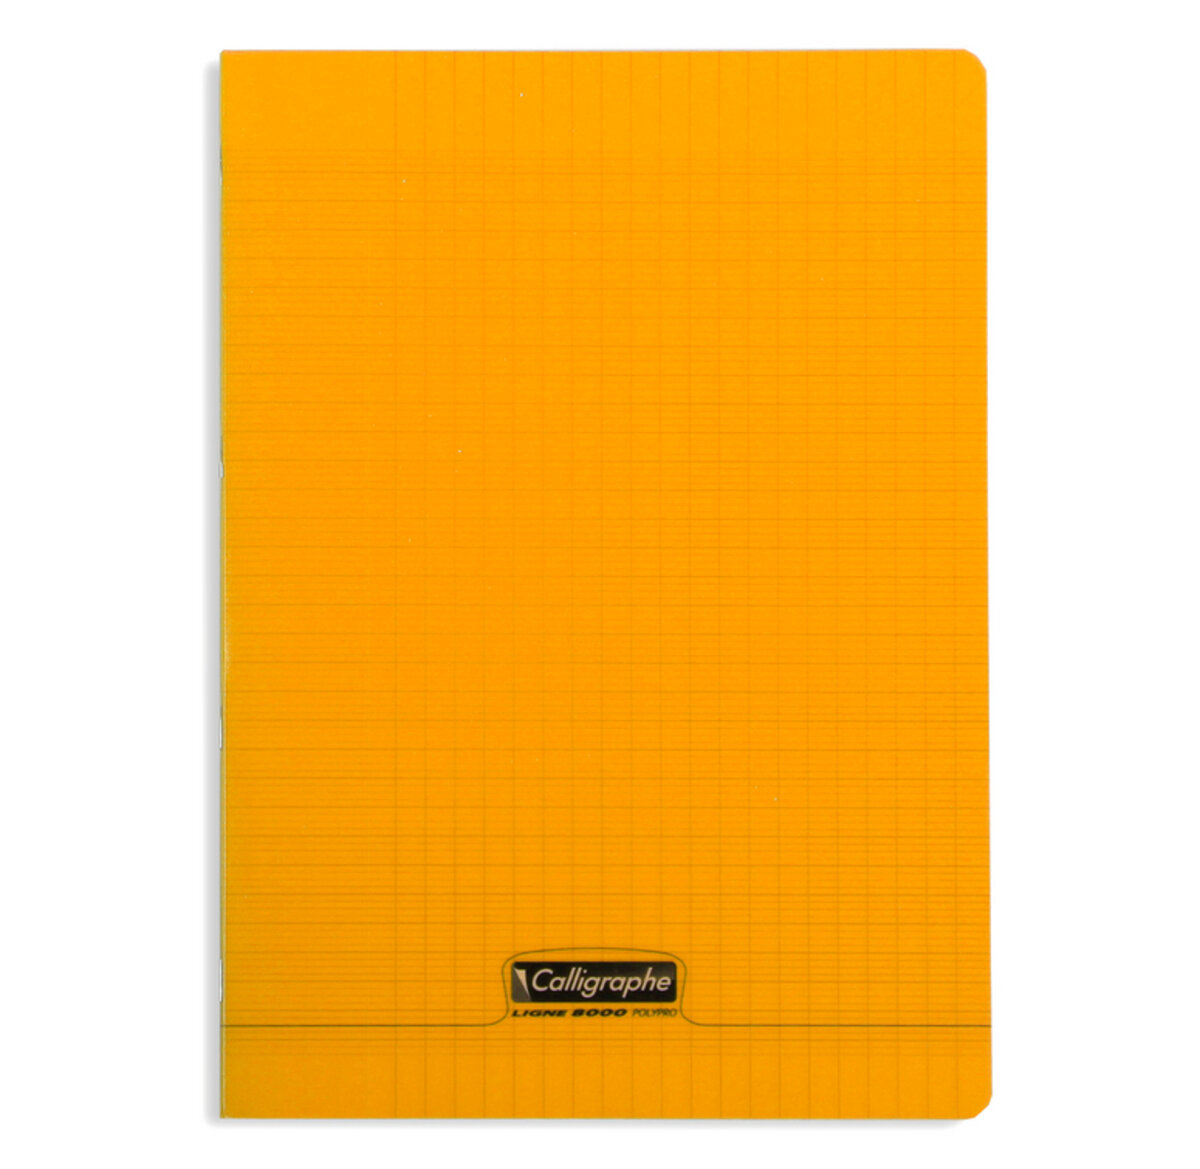 Cahier 8000 POLYPRO, 210 x 297 mm, orange CALLIGRAPHE - La Poste